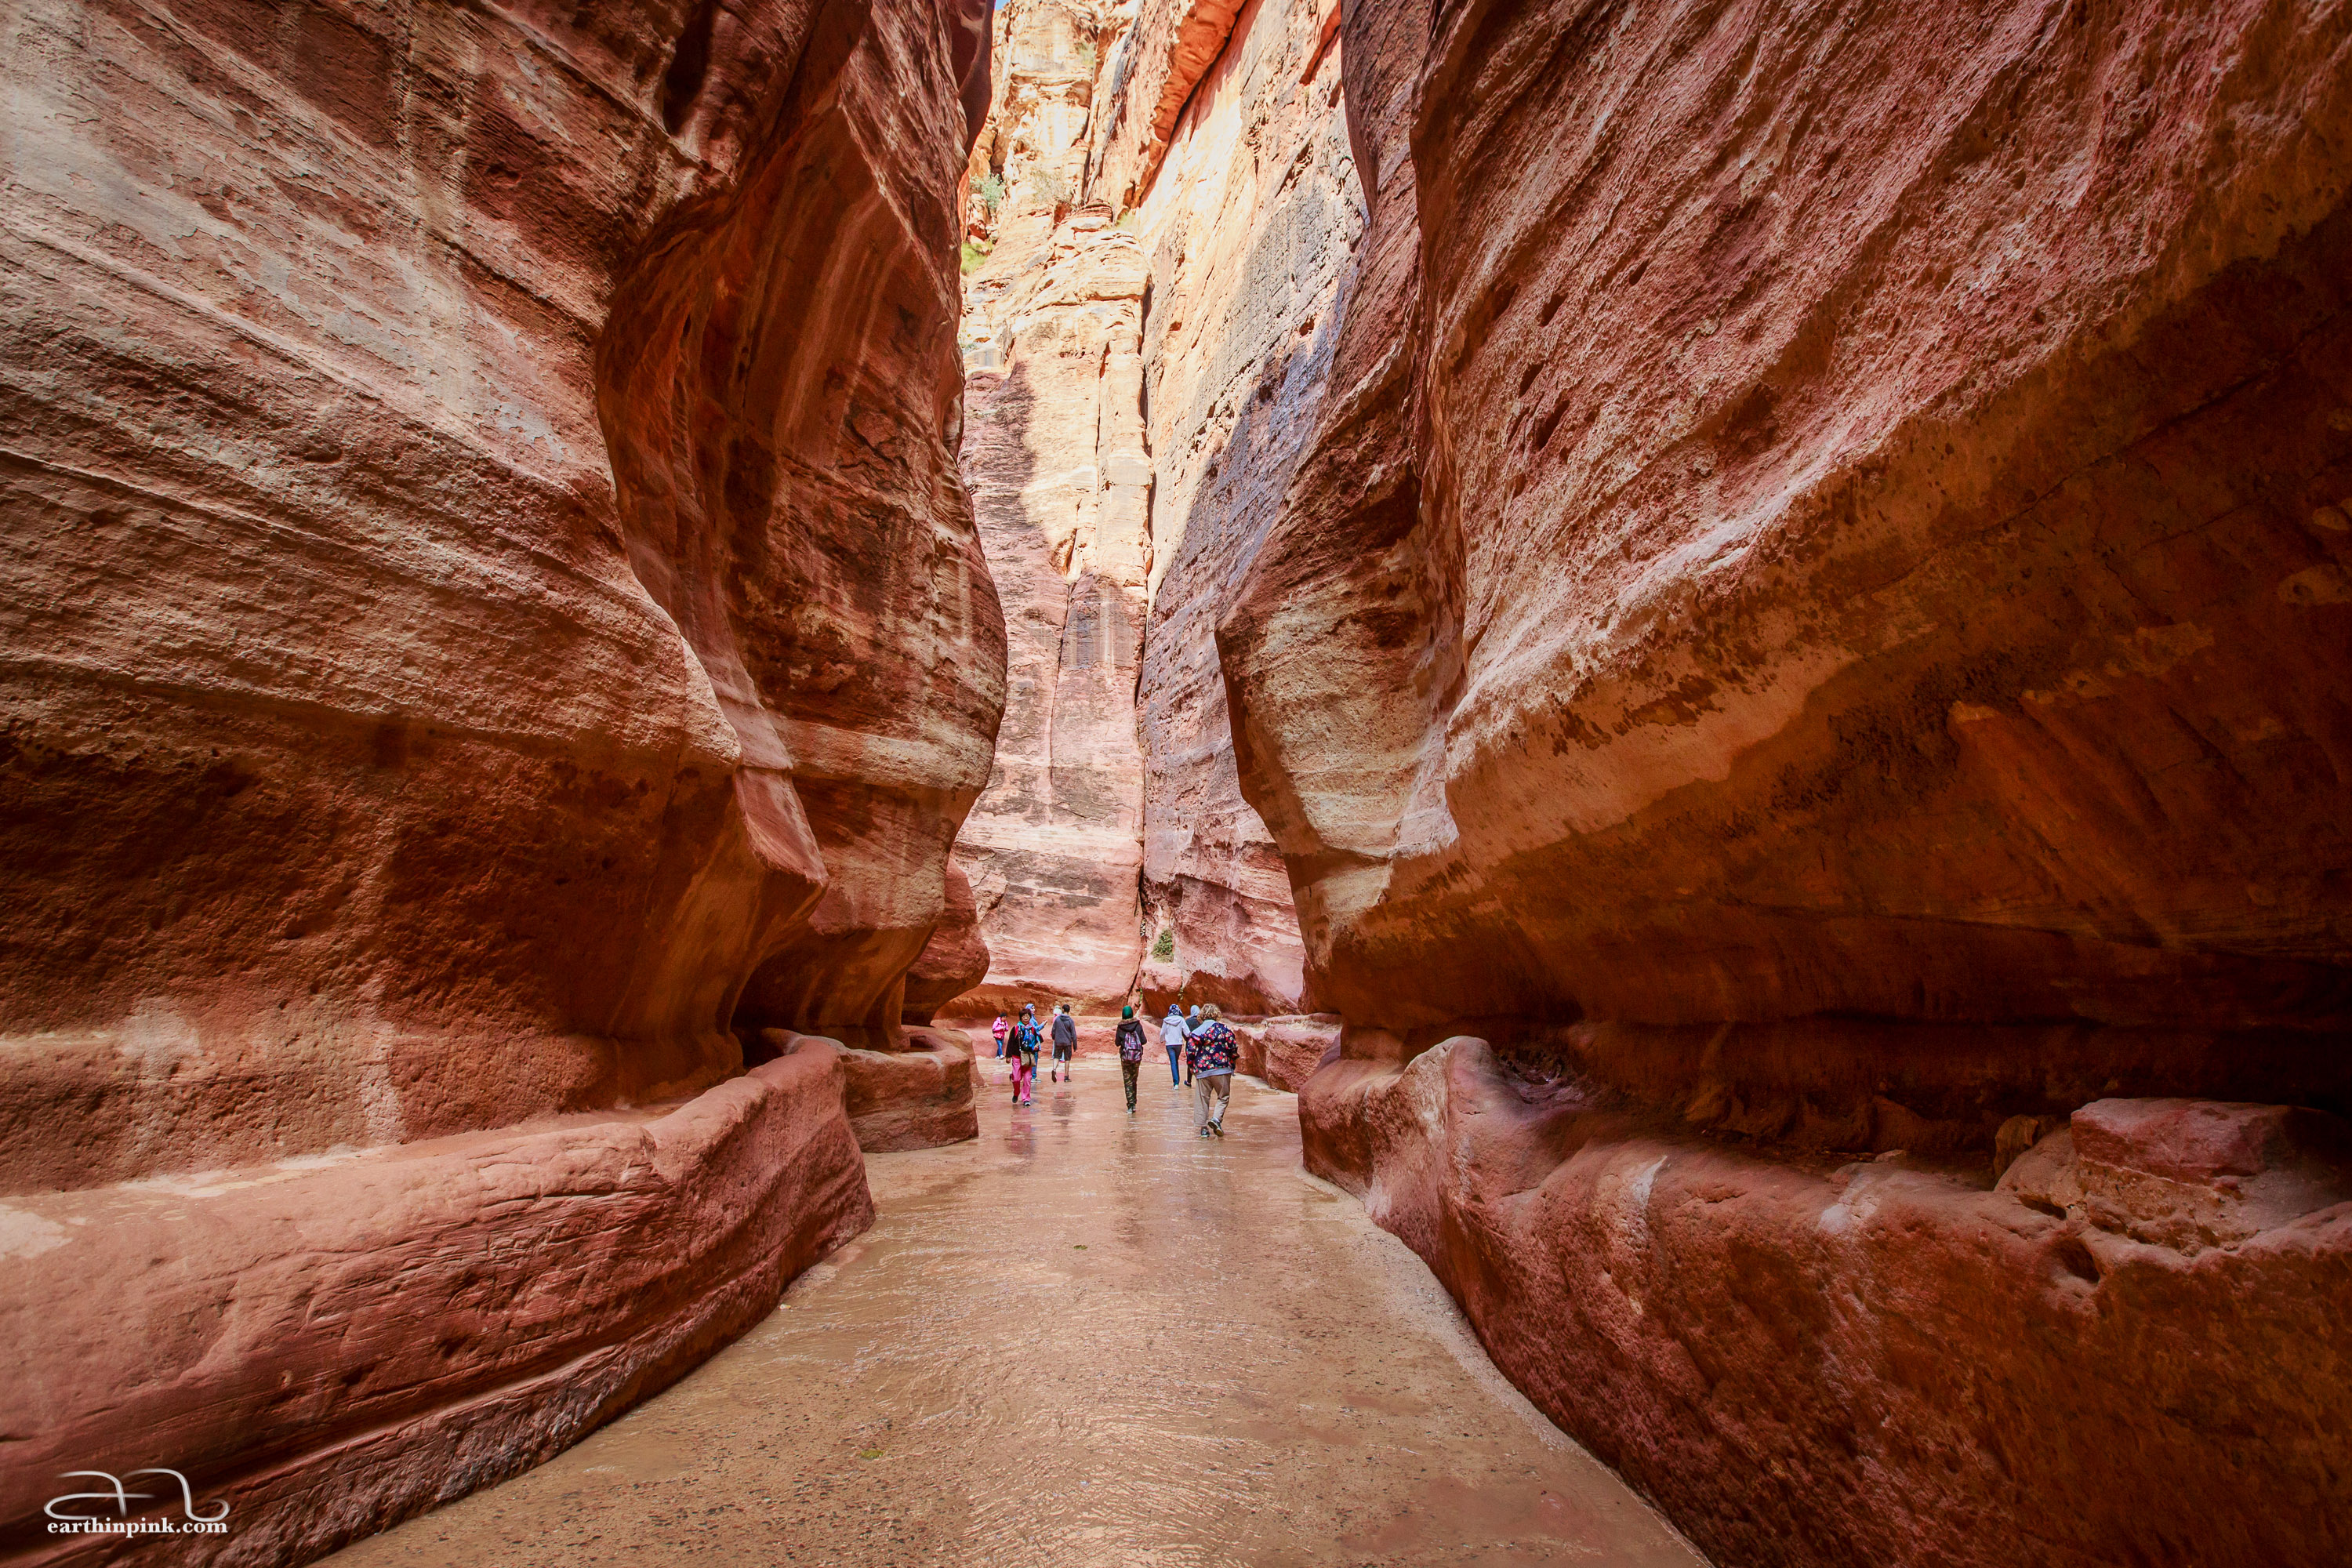 Narrow canyon entrance to the ancient city of Petra